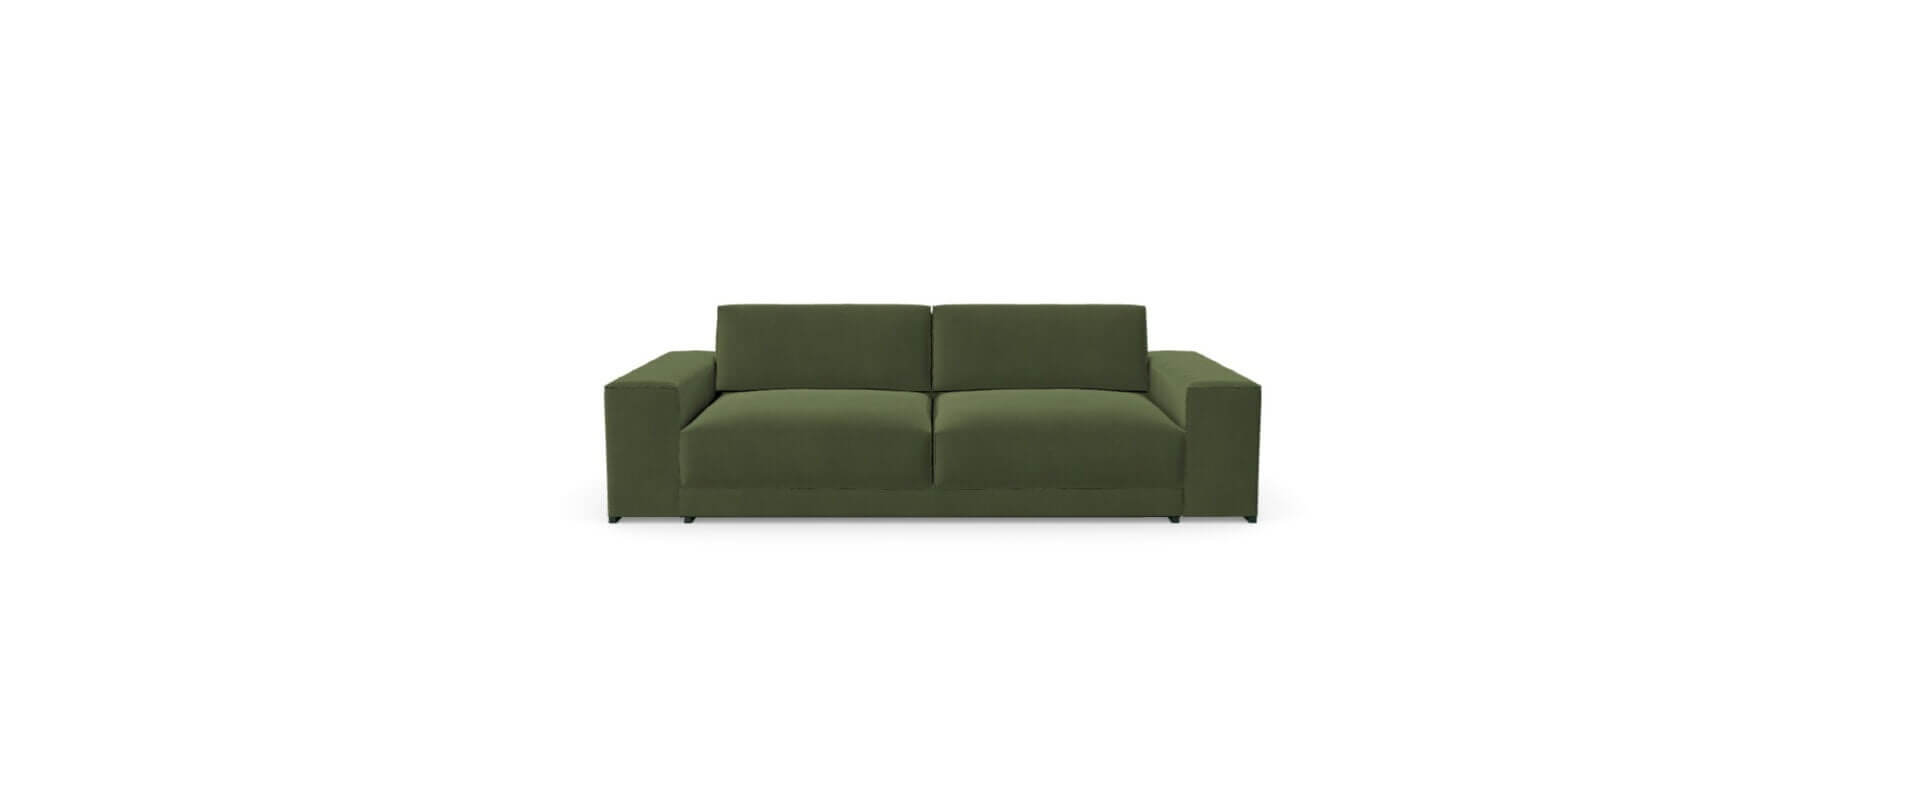 canapea verde moderna